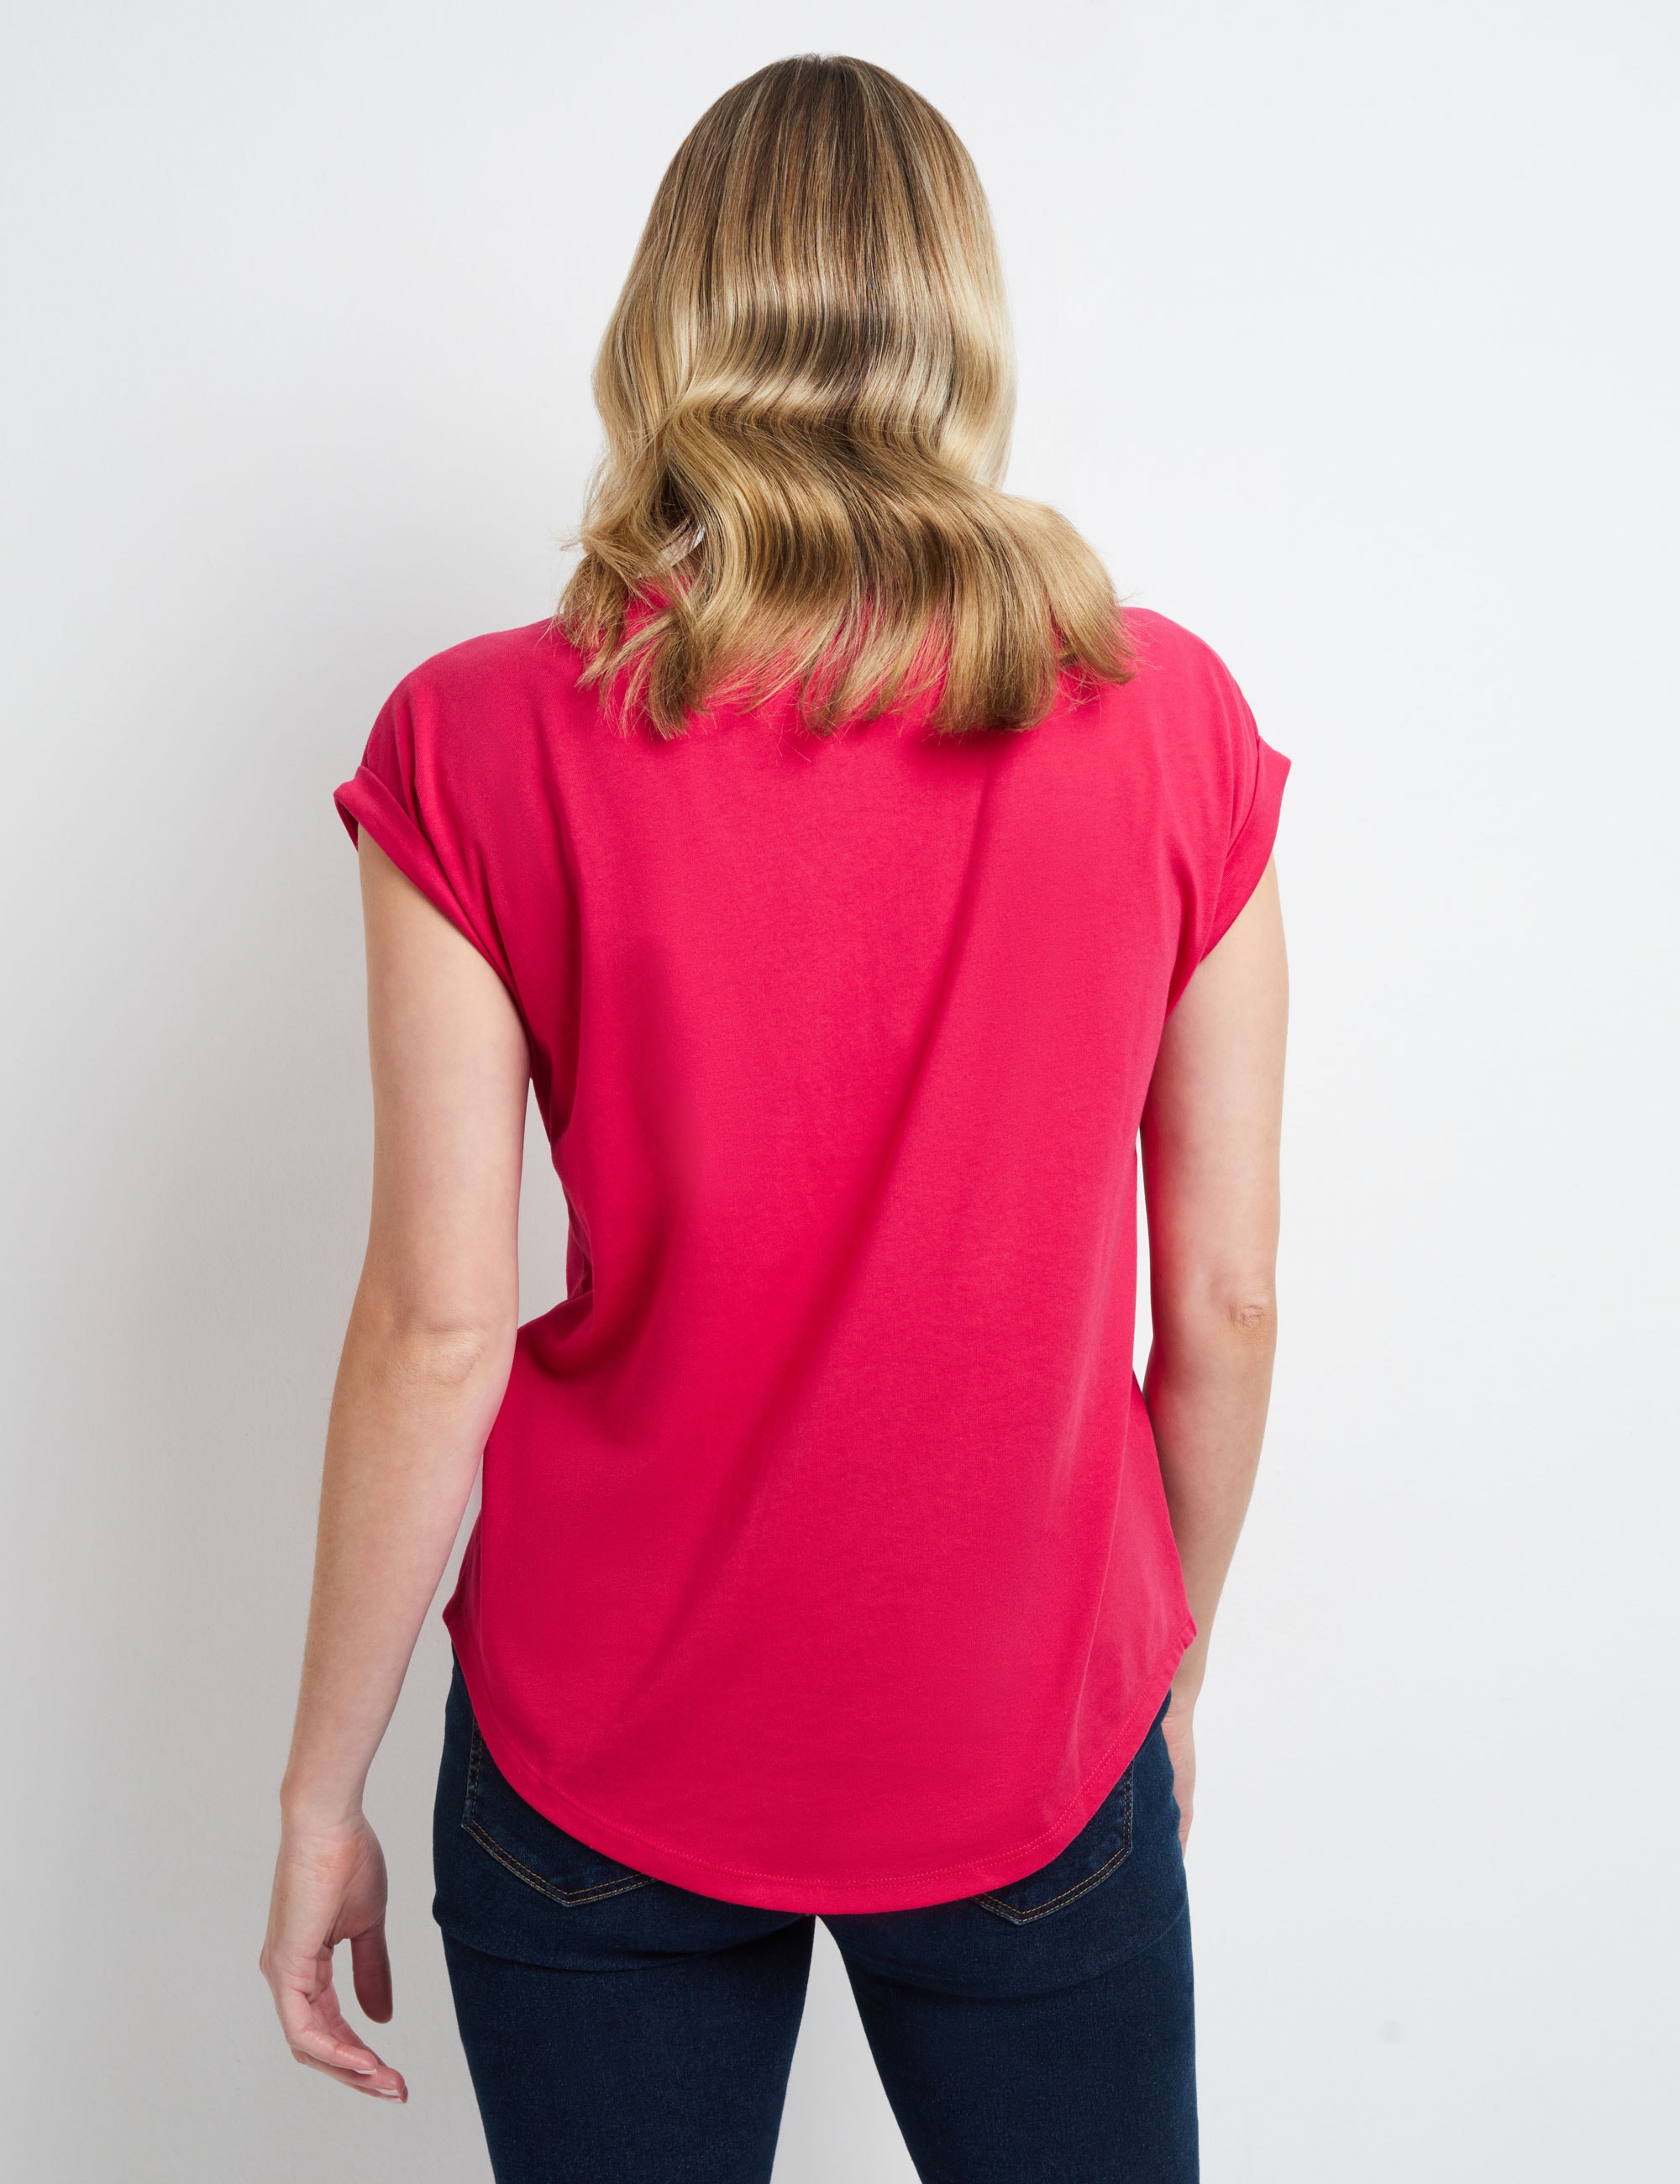 RIVERS - Womens Tops - Short Sleeve Essential T-Shirt | eBay